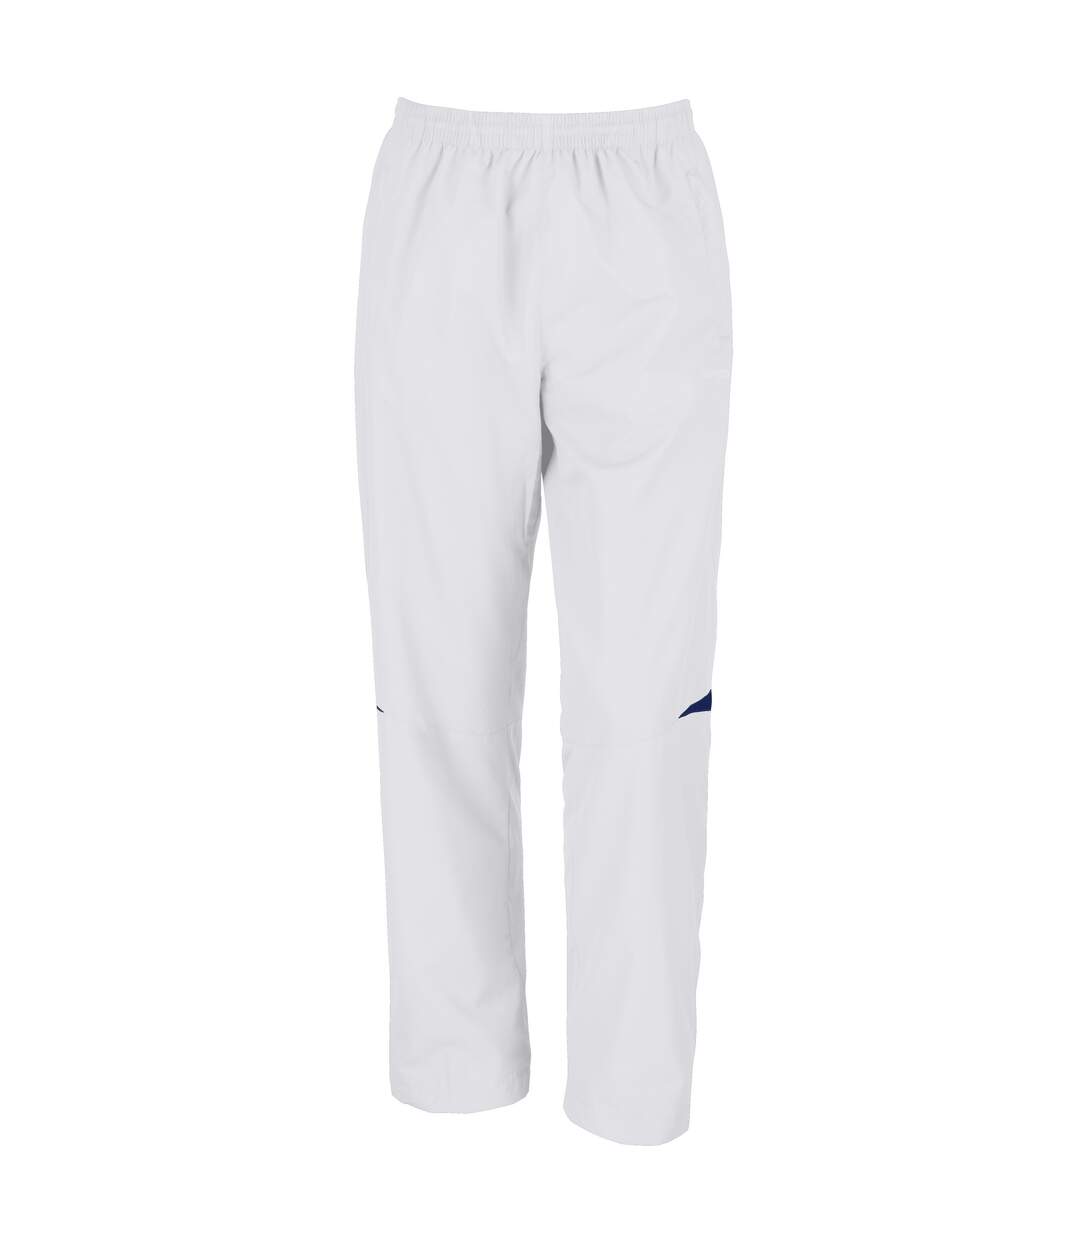 Spiro Mens Micro-Lite Performance Sports Pants / Tracksuit Bottoms (White/Navy)